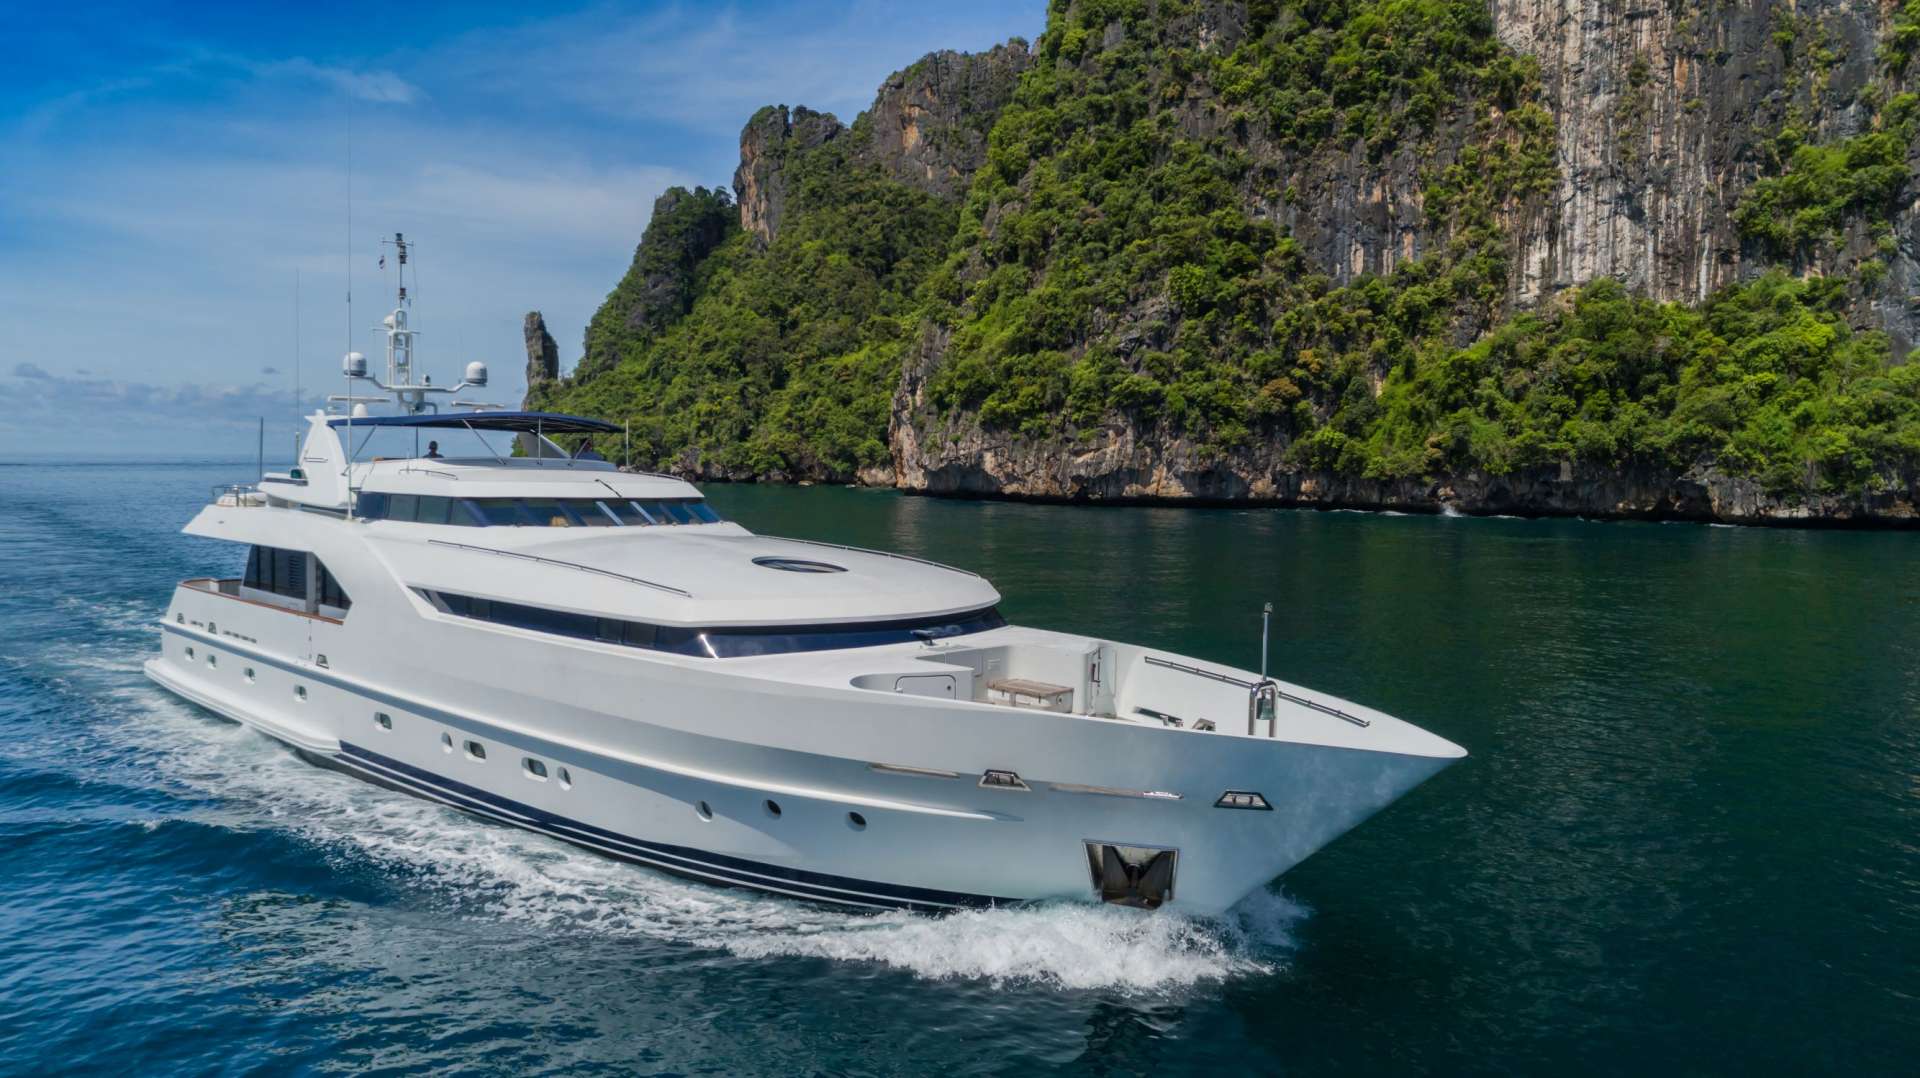 xanadu of london - Yacht Charter Langkawi & Boat hire in SE Asia 1